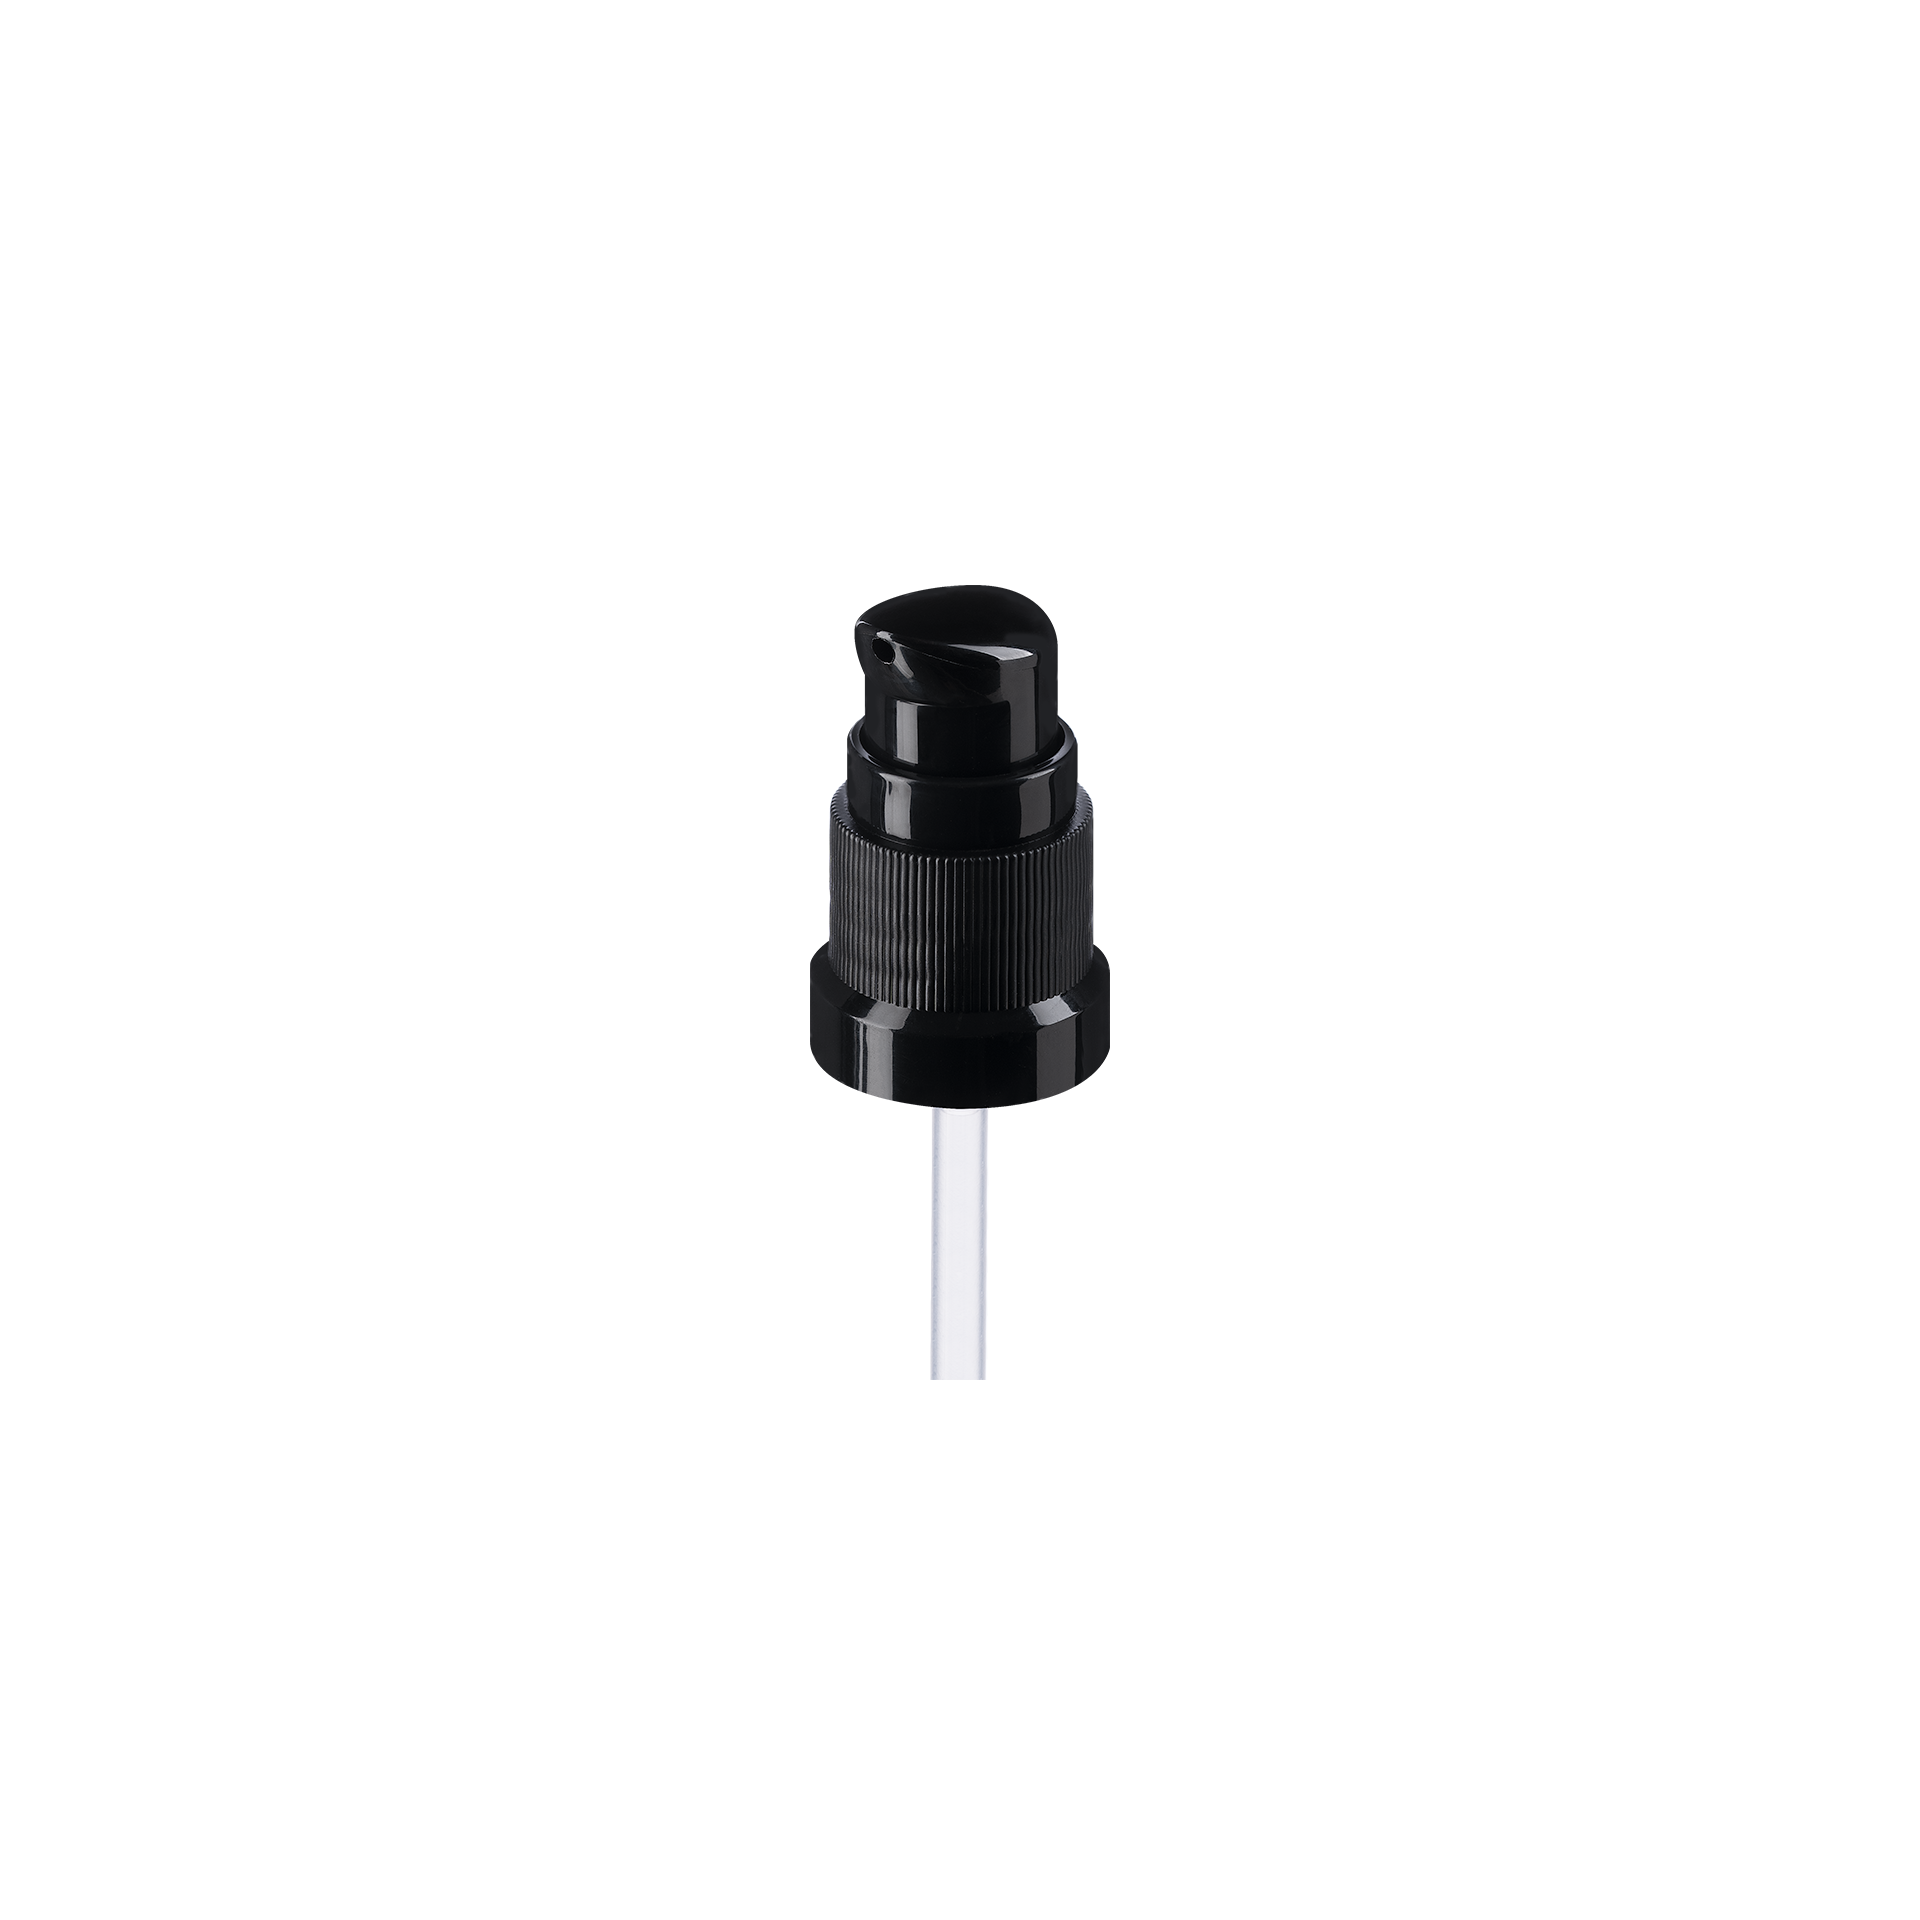 Lotion pump Metropolitan DIN18, PP, black, dose 0.15ml, black security clip (Ginger 100)